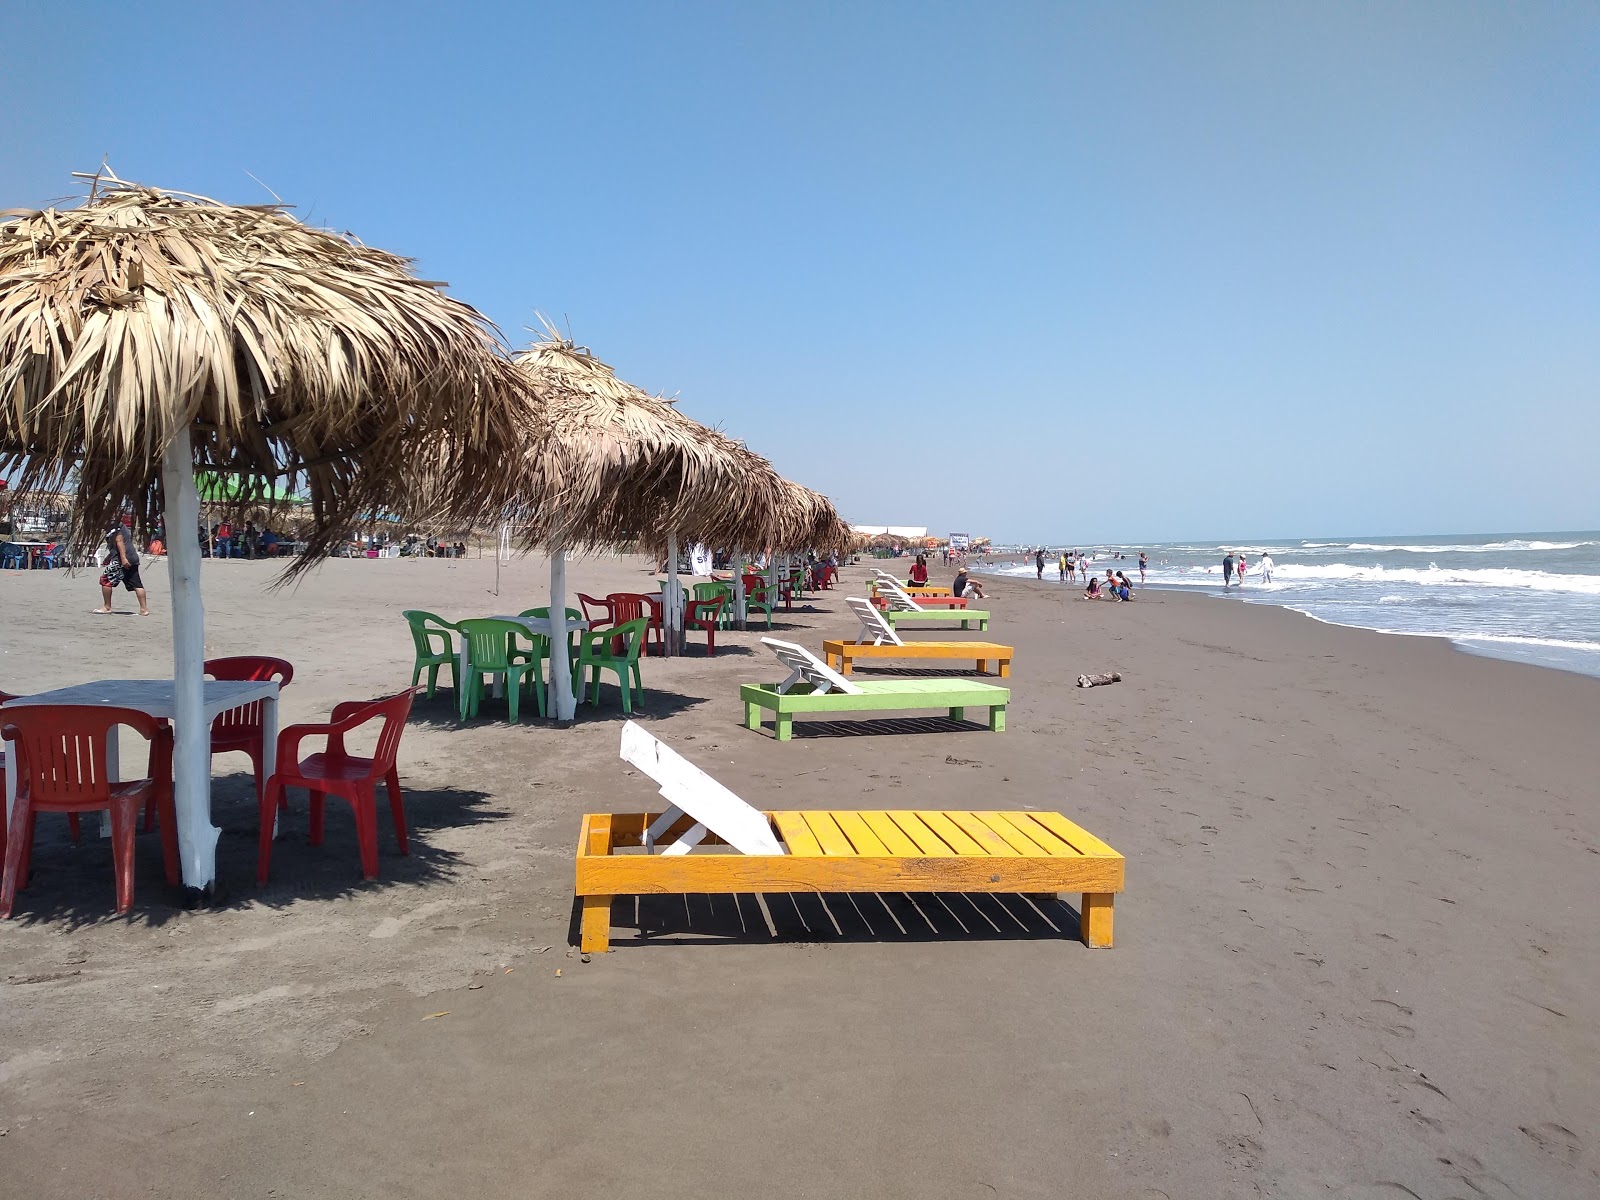 Foto di Playa Maracaibo con una superficie del sabbia luminosa